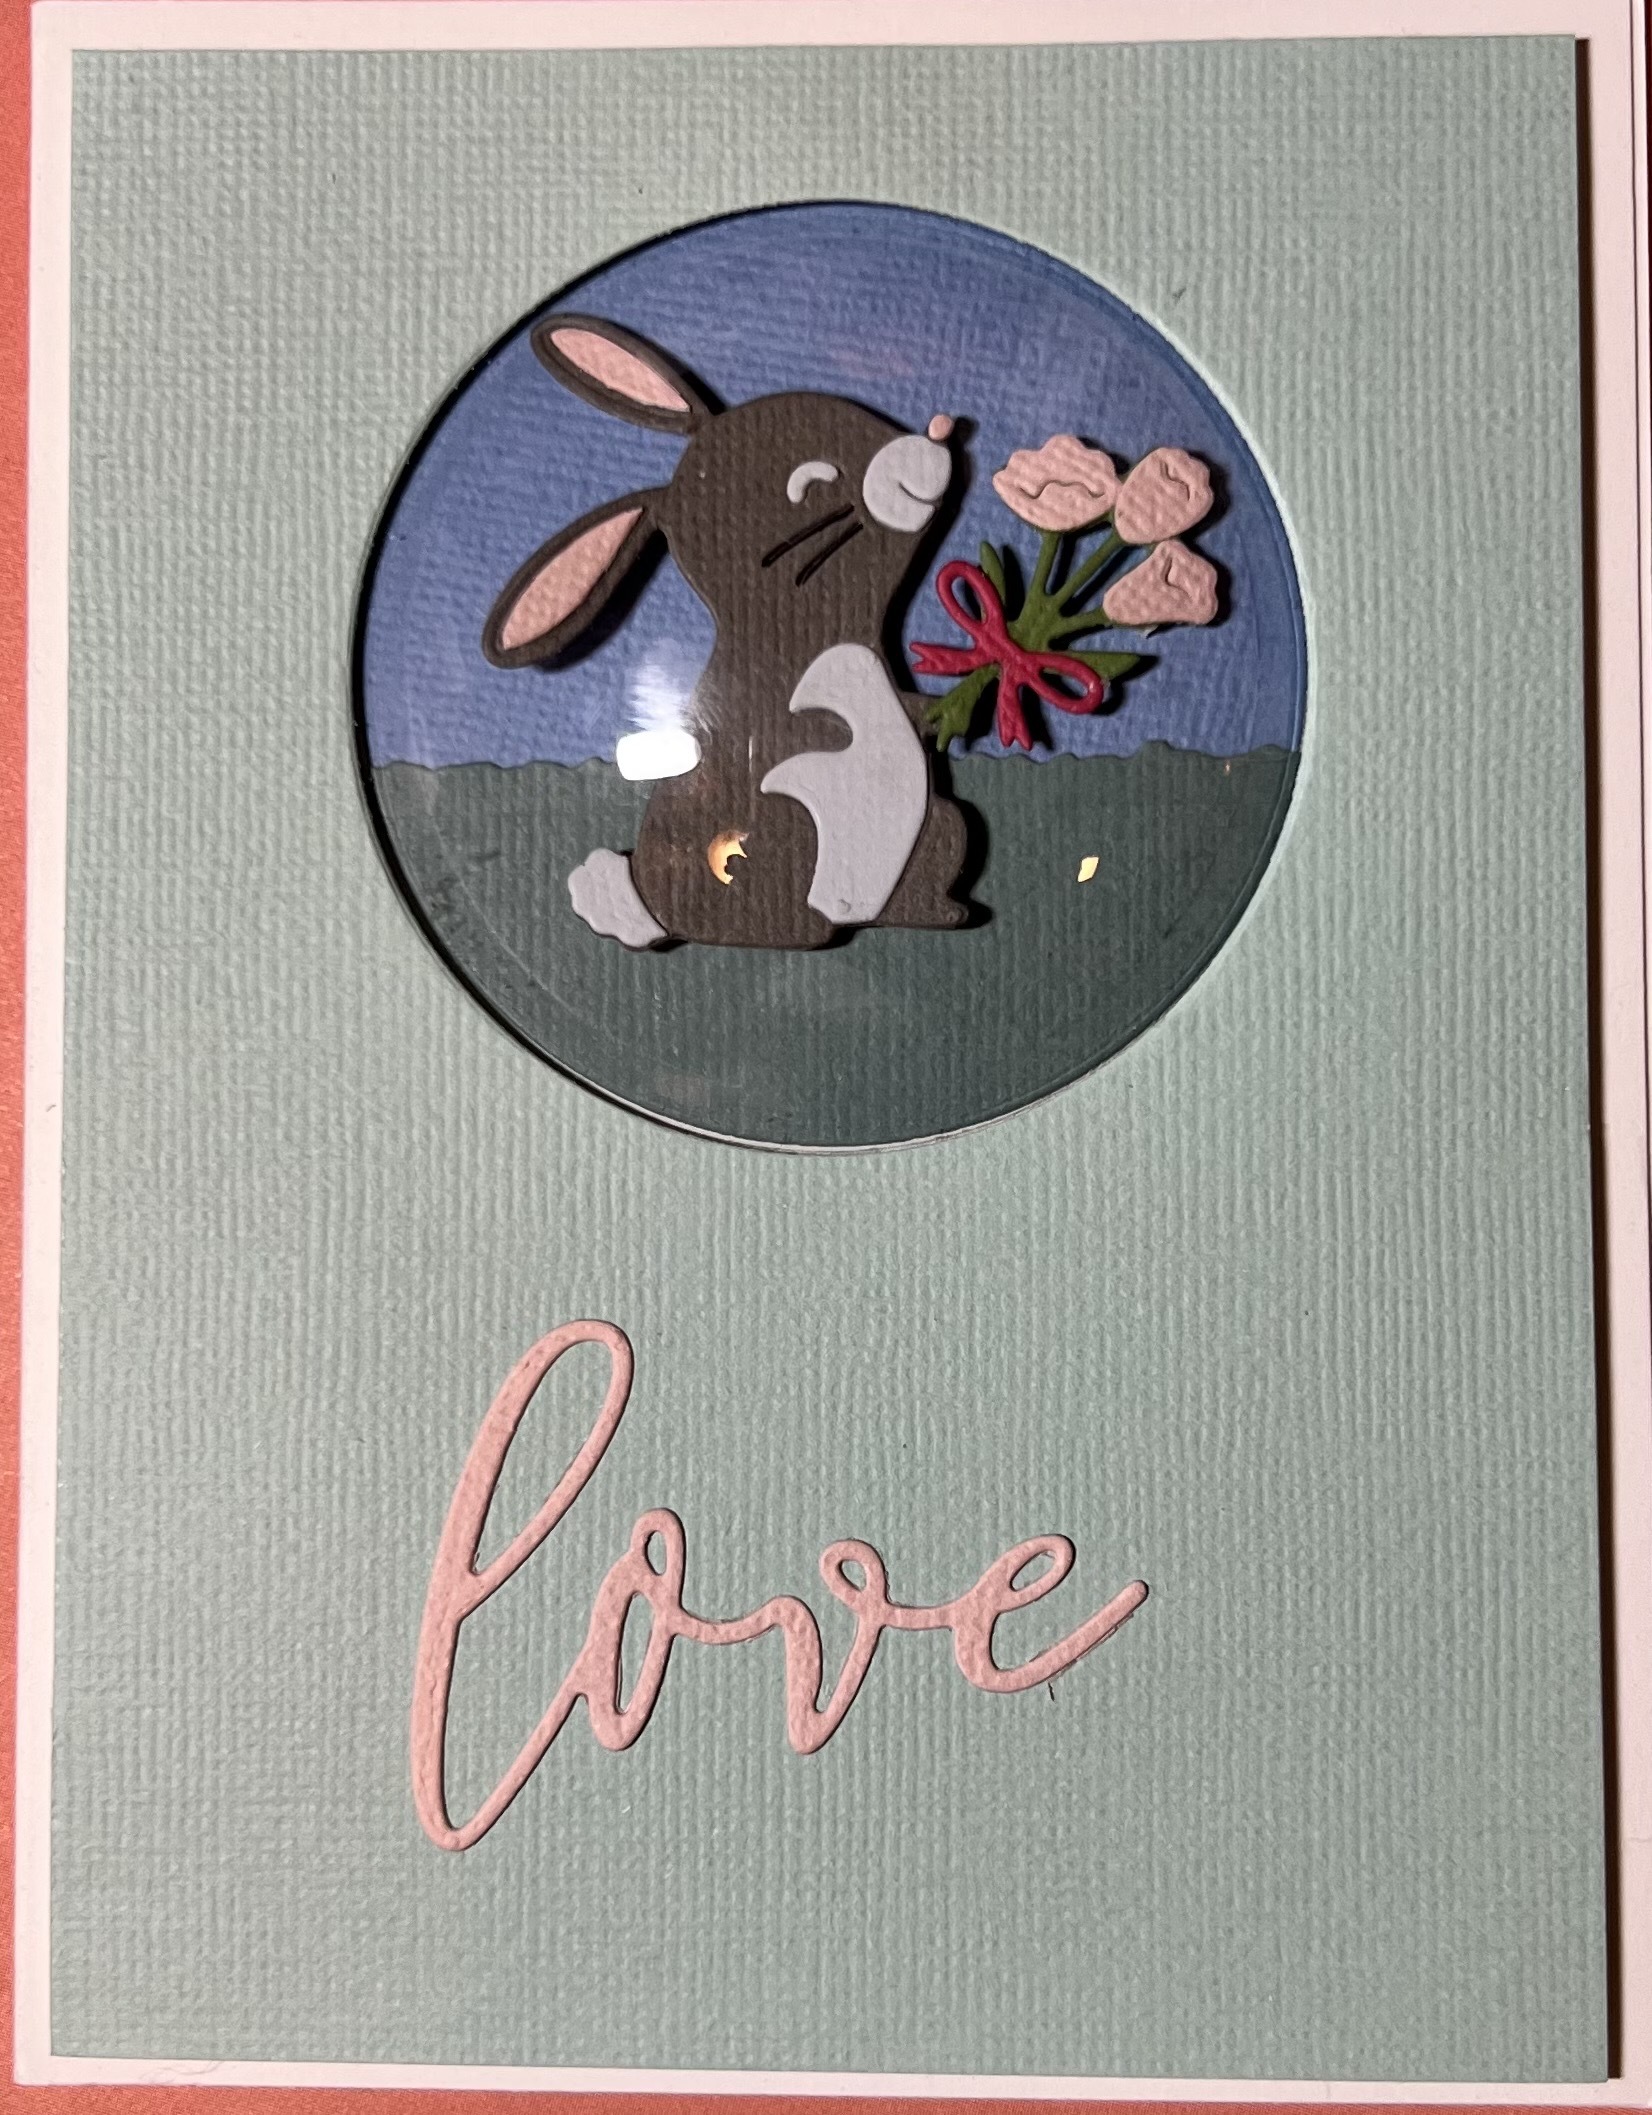 Love Bunny Card